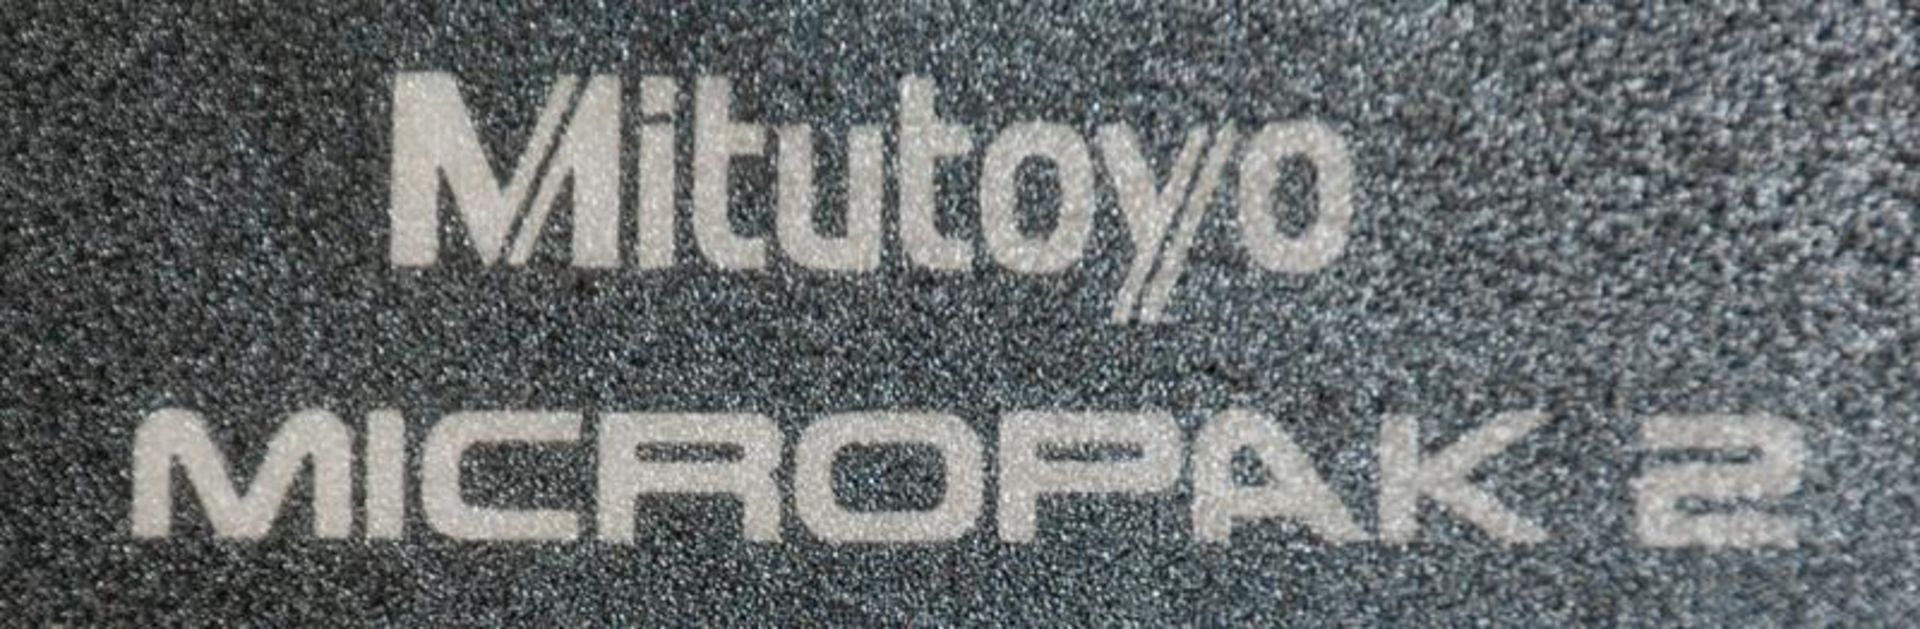 Mitutoyo PH350 14" Optical Comparator, S/N: 120161, W/ Mitutoyo Micropak 2 983-352, S/N: 2020015 - Image 8 of 9